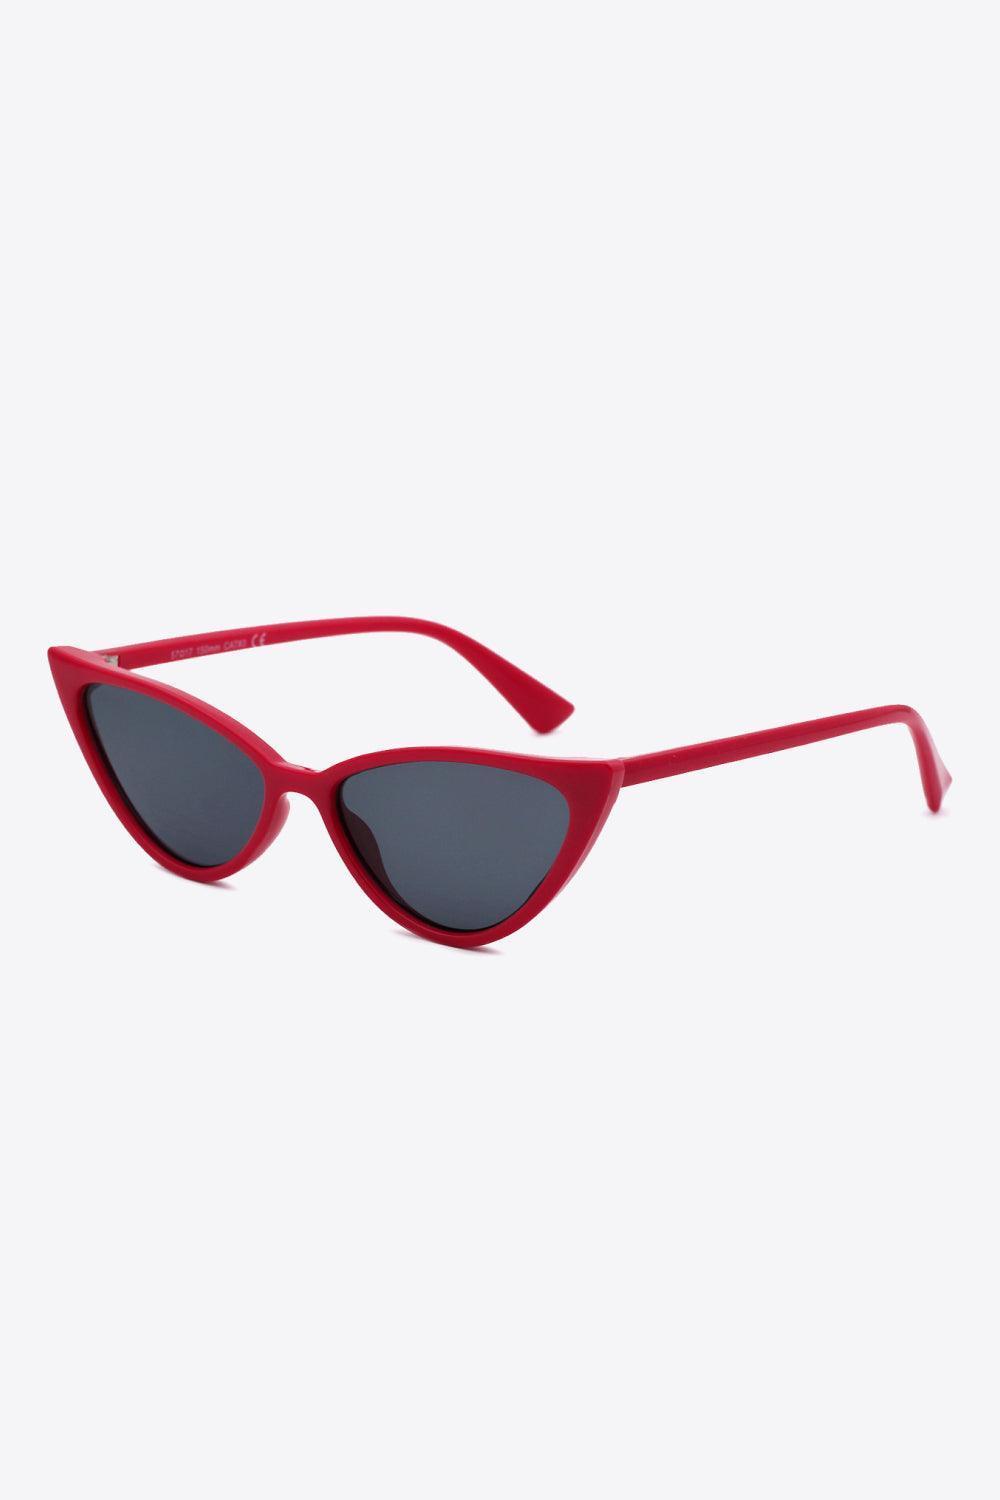 Red Polycarbonate Frame Cat Eye Sunglasses - MXSTUDIO.COM